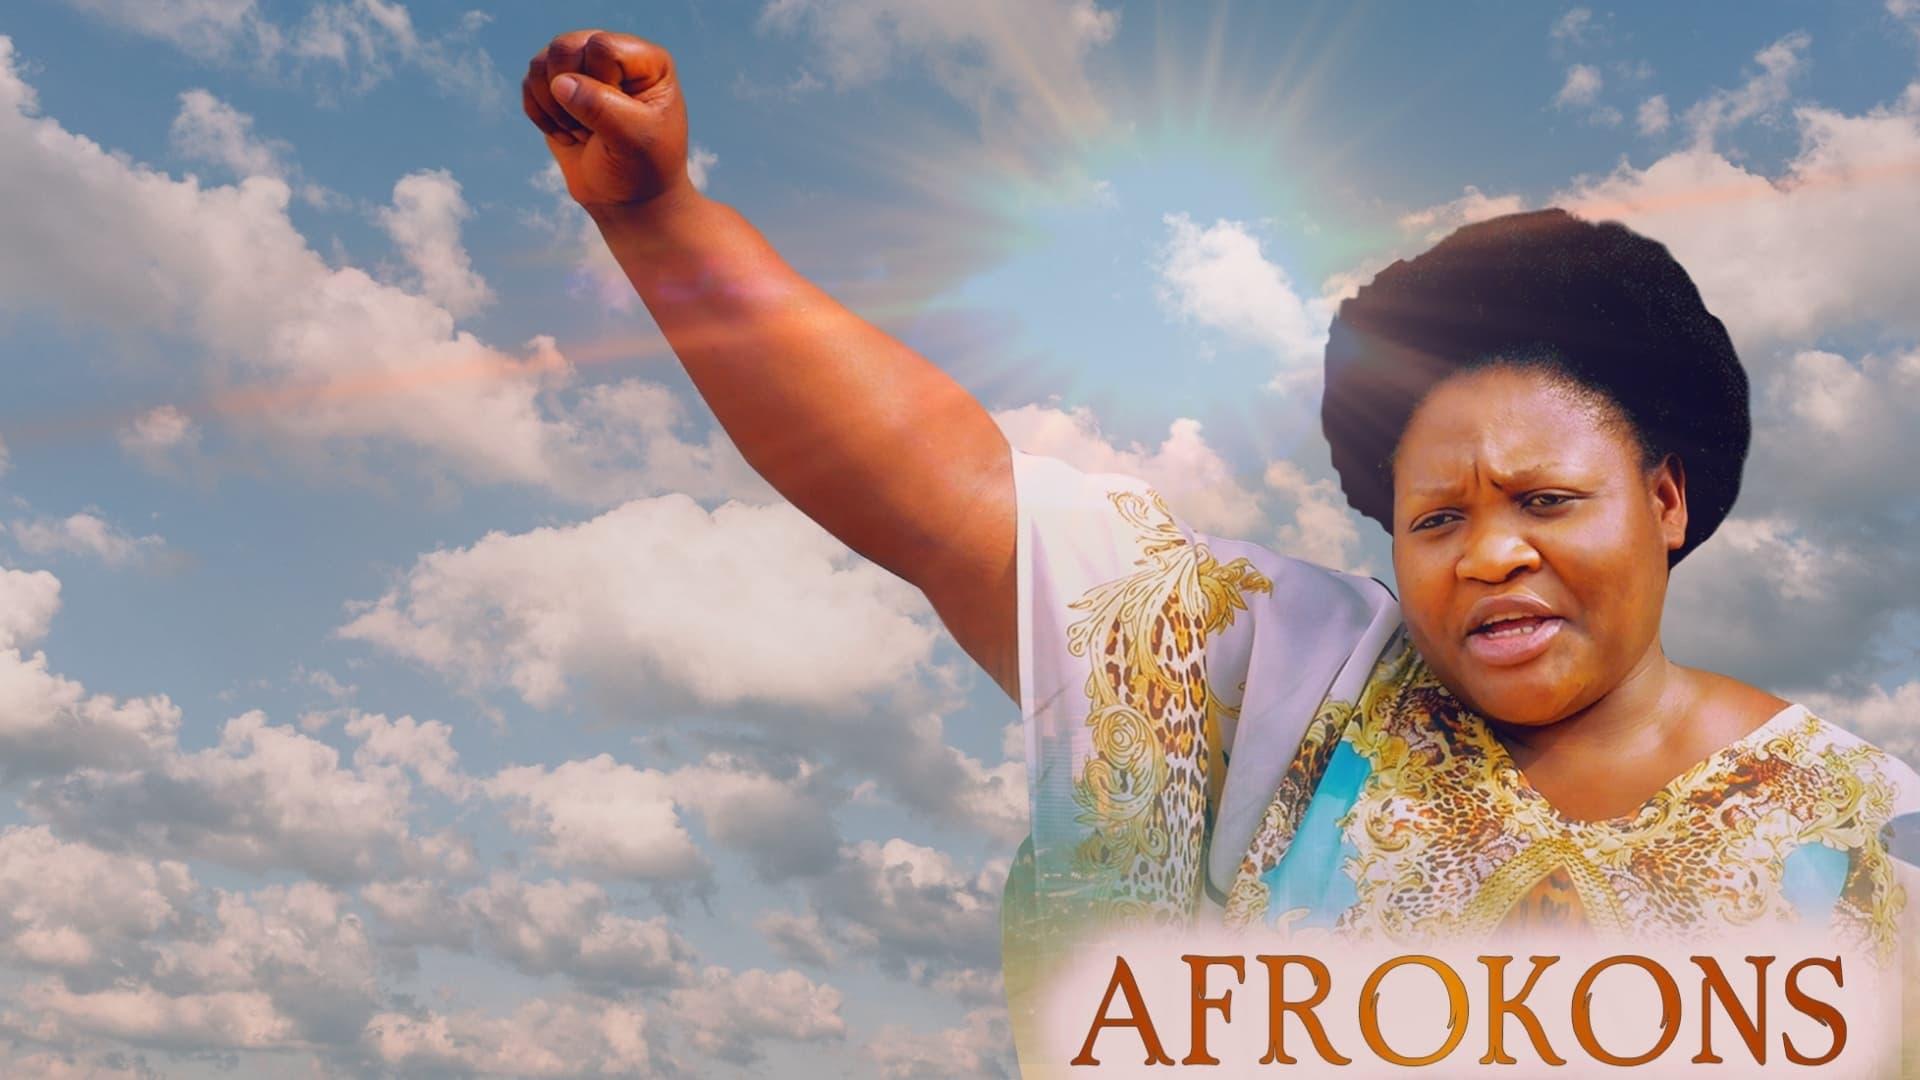 Afrokons backdrop